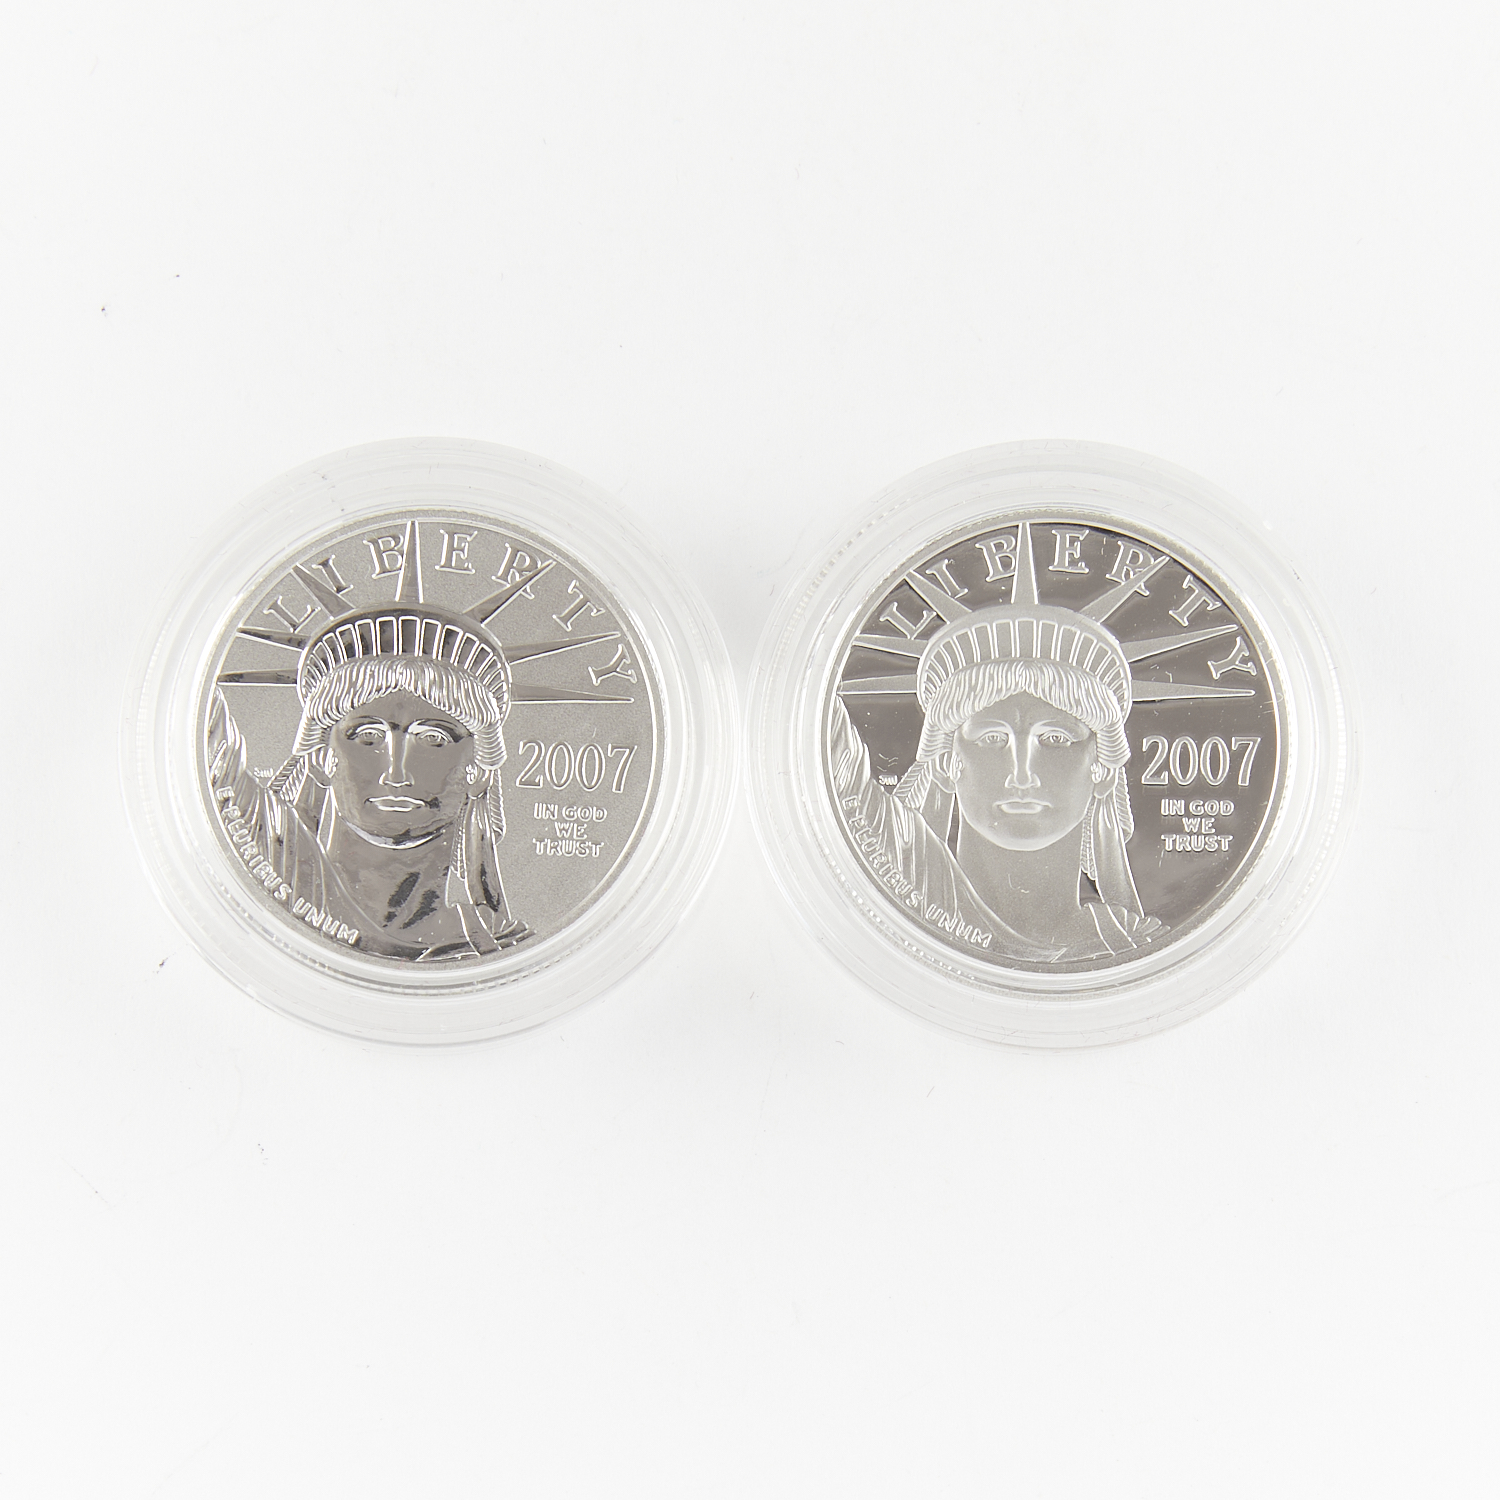 Set 2 10th Anniversary 2007 $50 Platinum Coins - Image 2 of 4